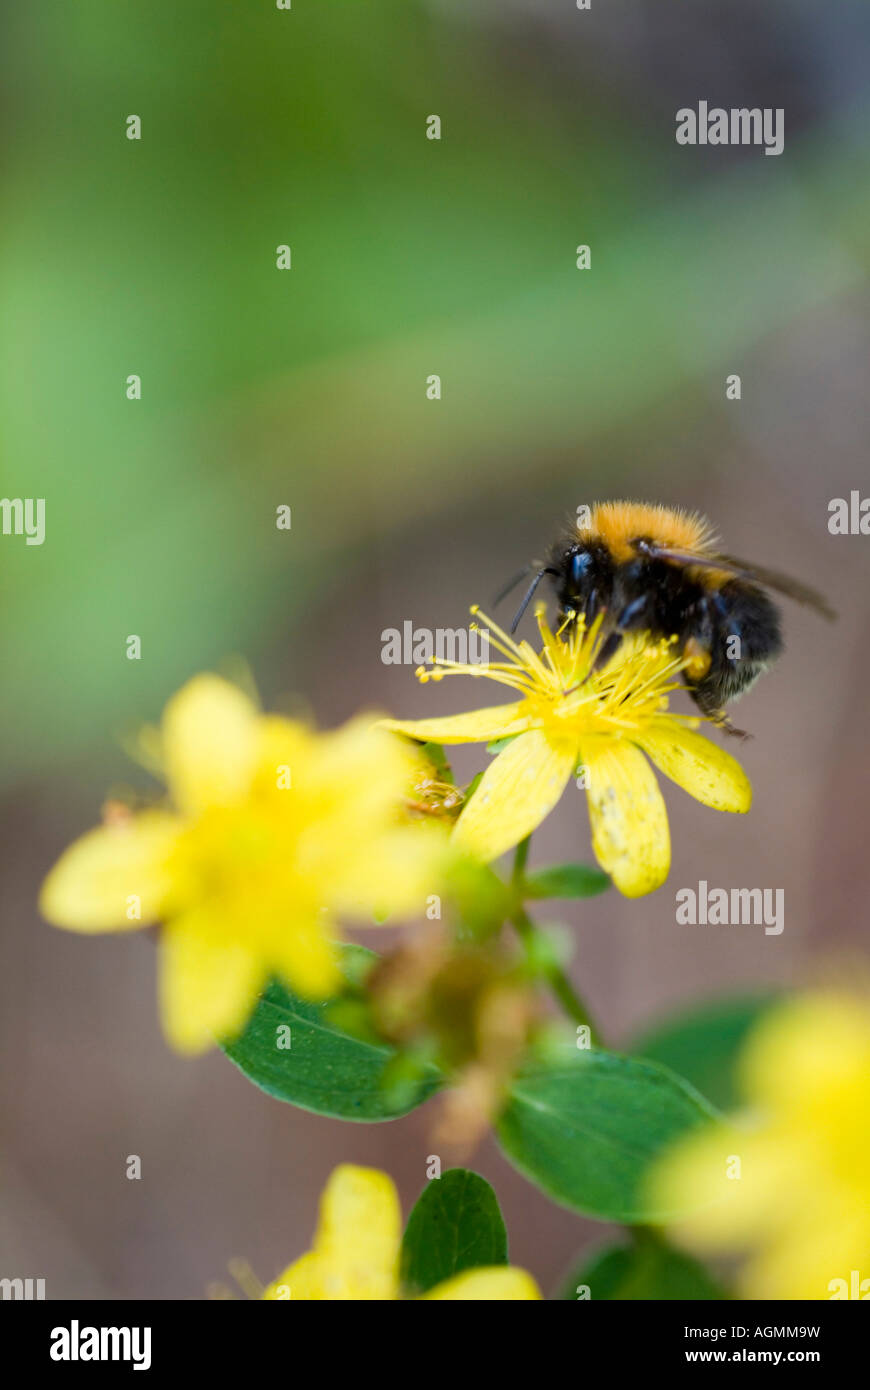 bumble bee on blossoms of St John s wort Hypericum perforatum medicinal plant Stock Photo